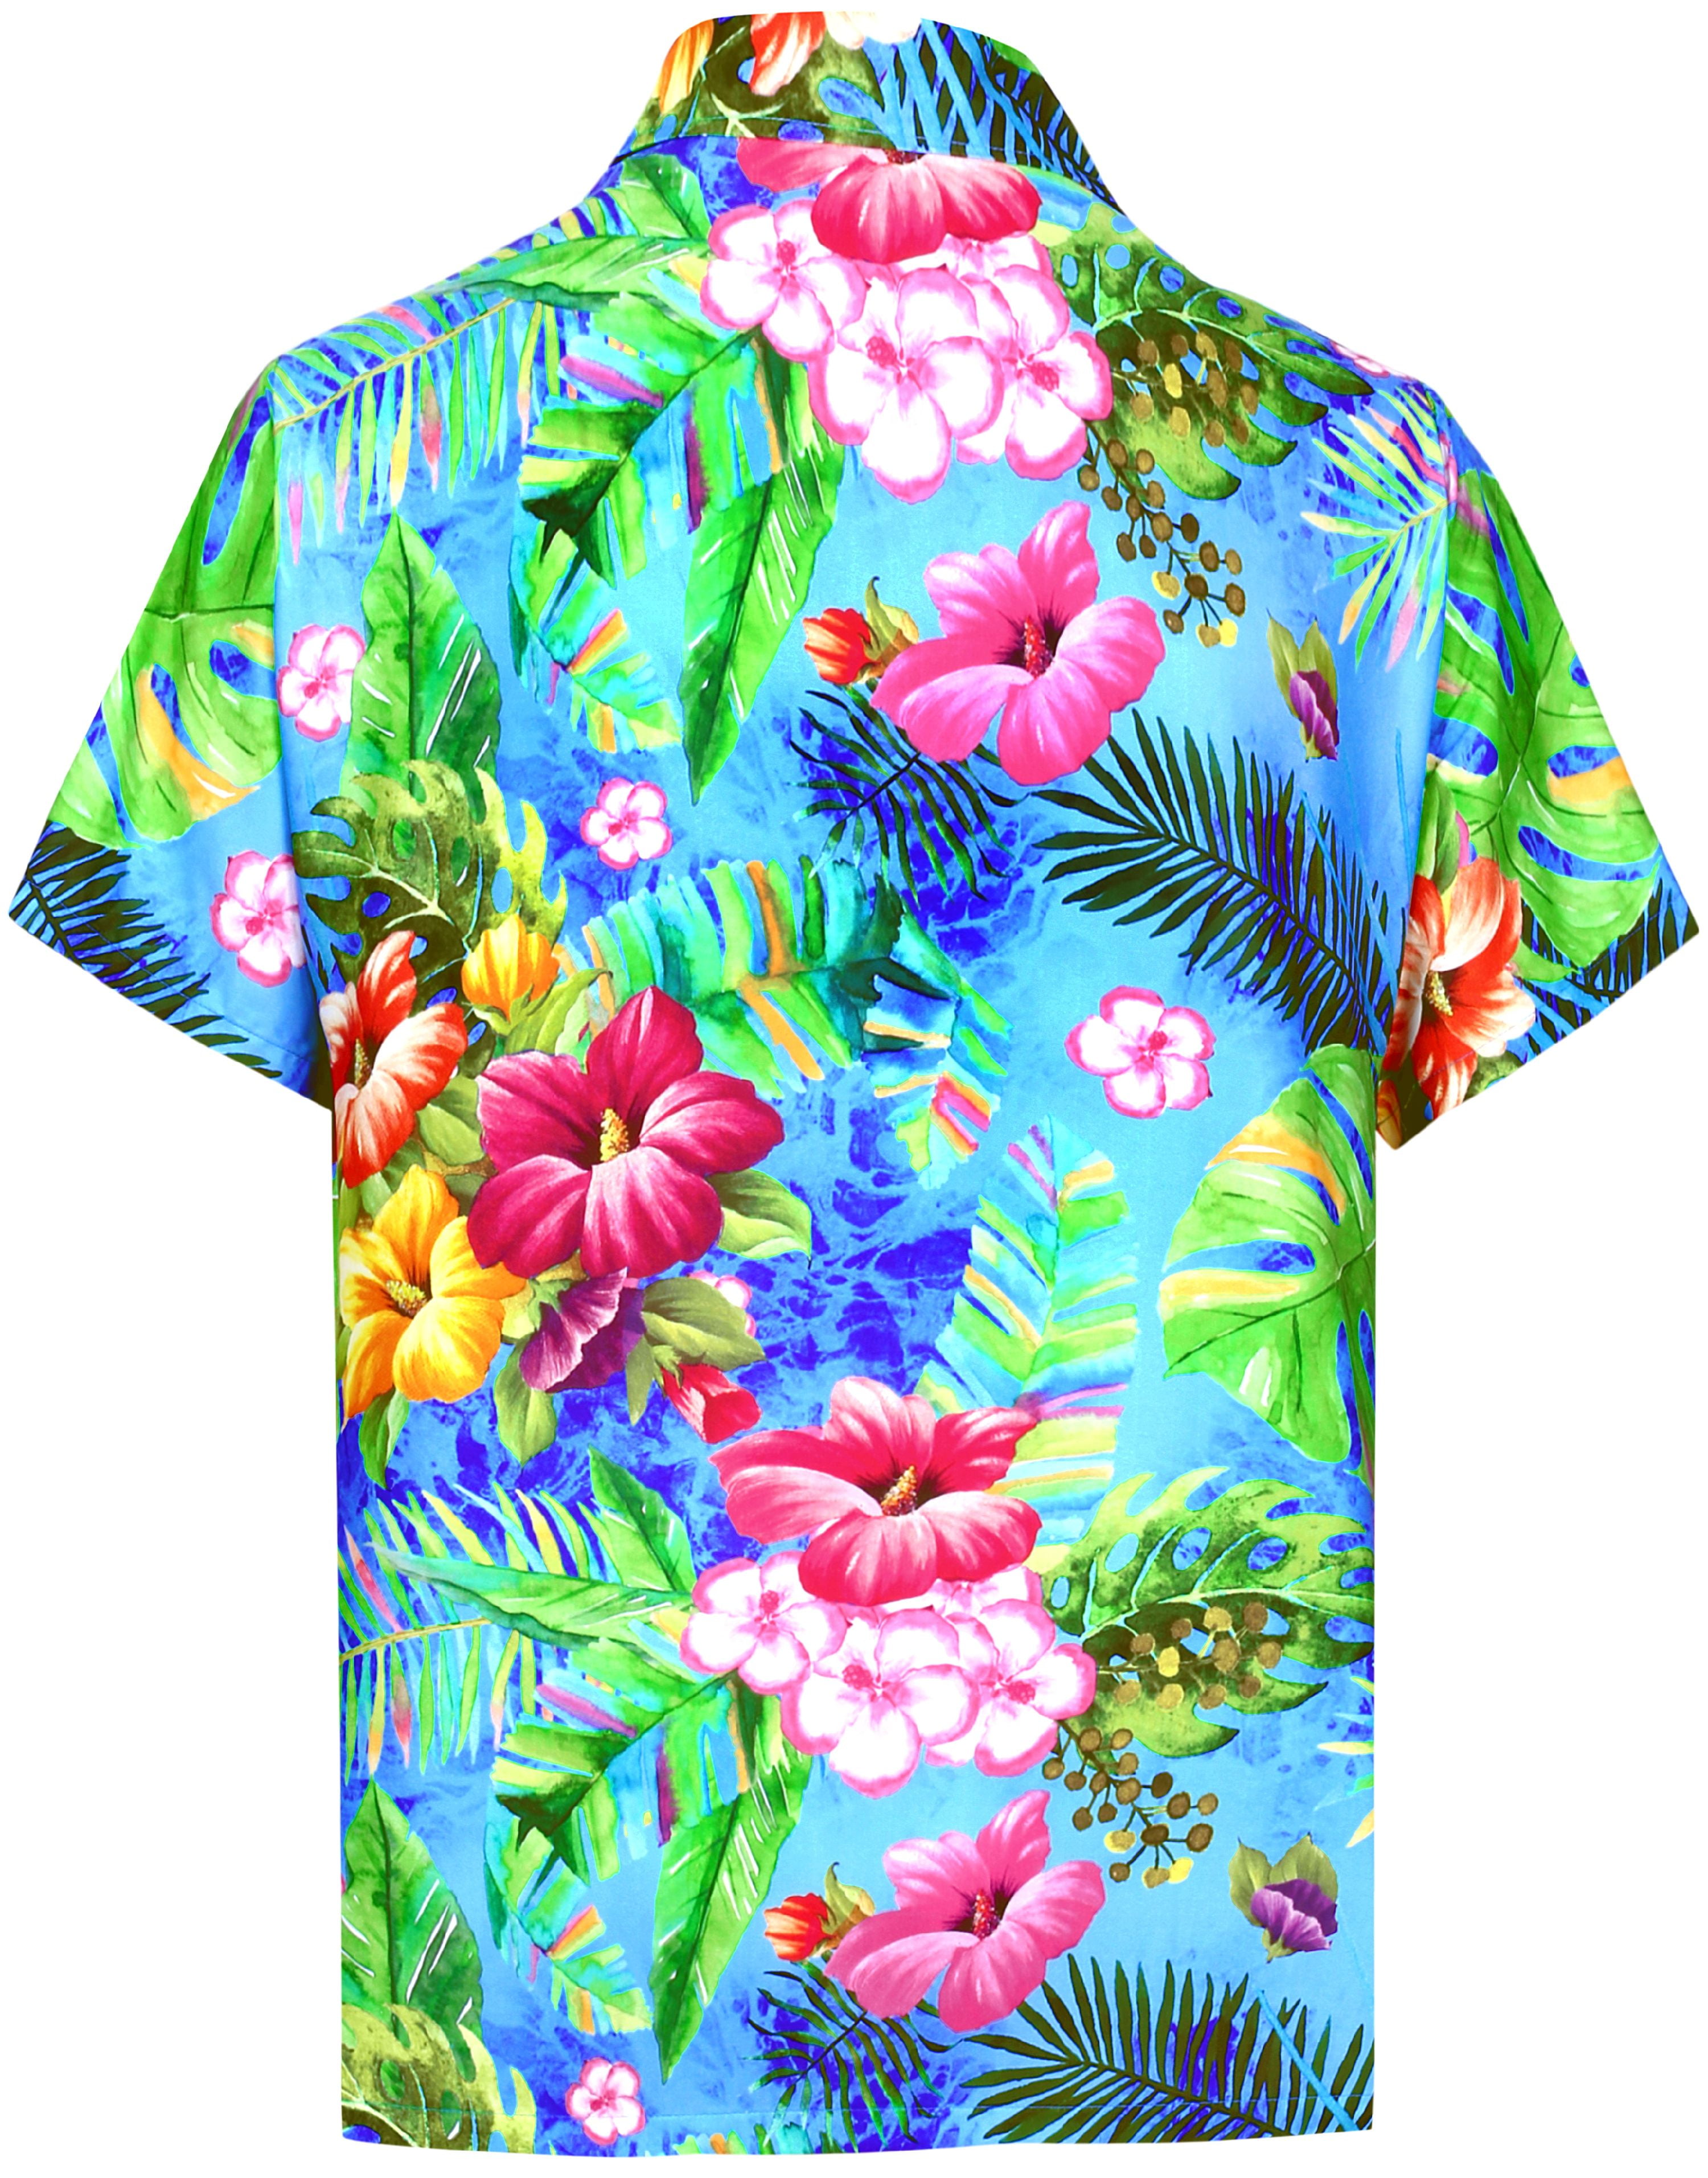 HAPPY BAY Men's Funky Beach Button Down Hawaiian Shirts 4XL Kohl, Leaves 